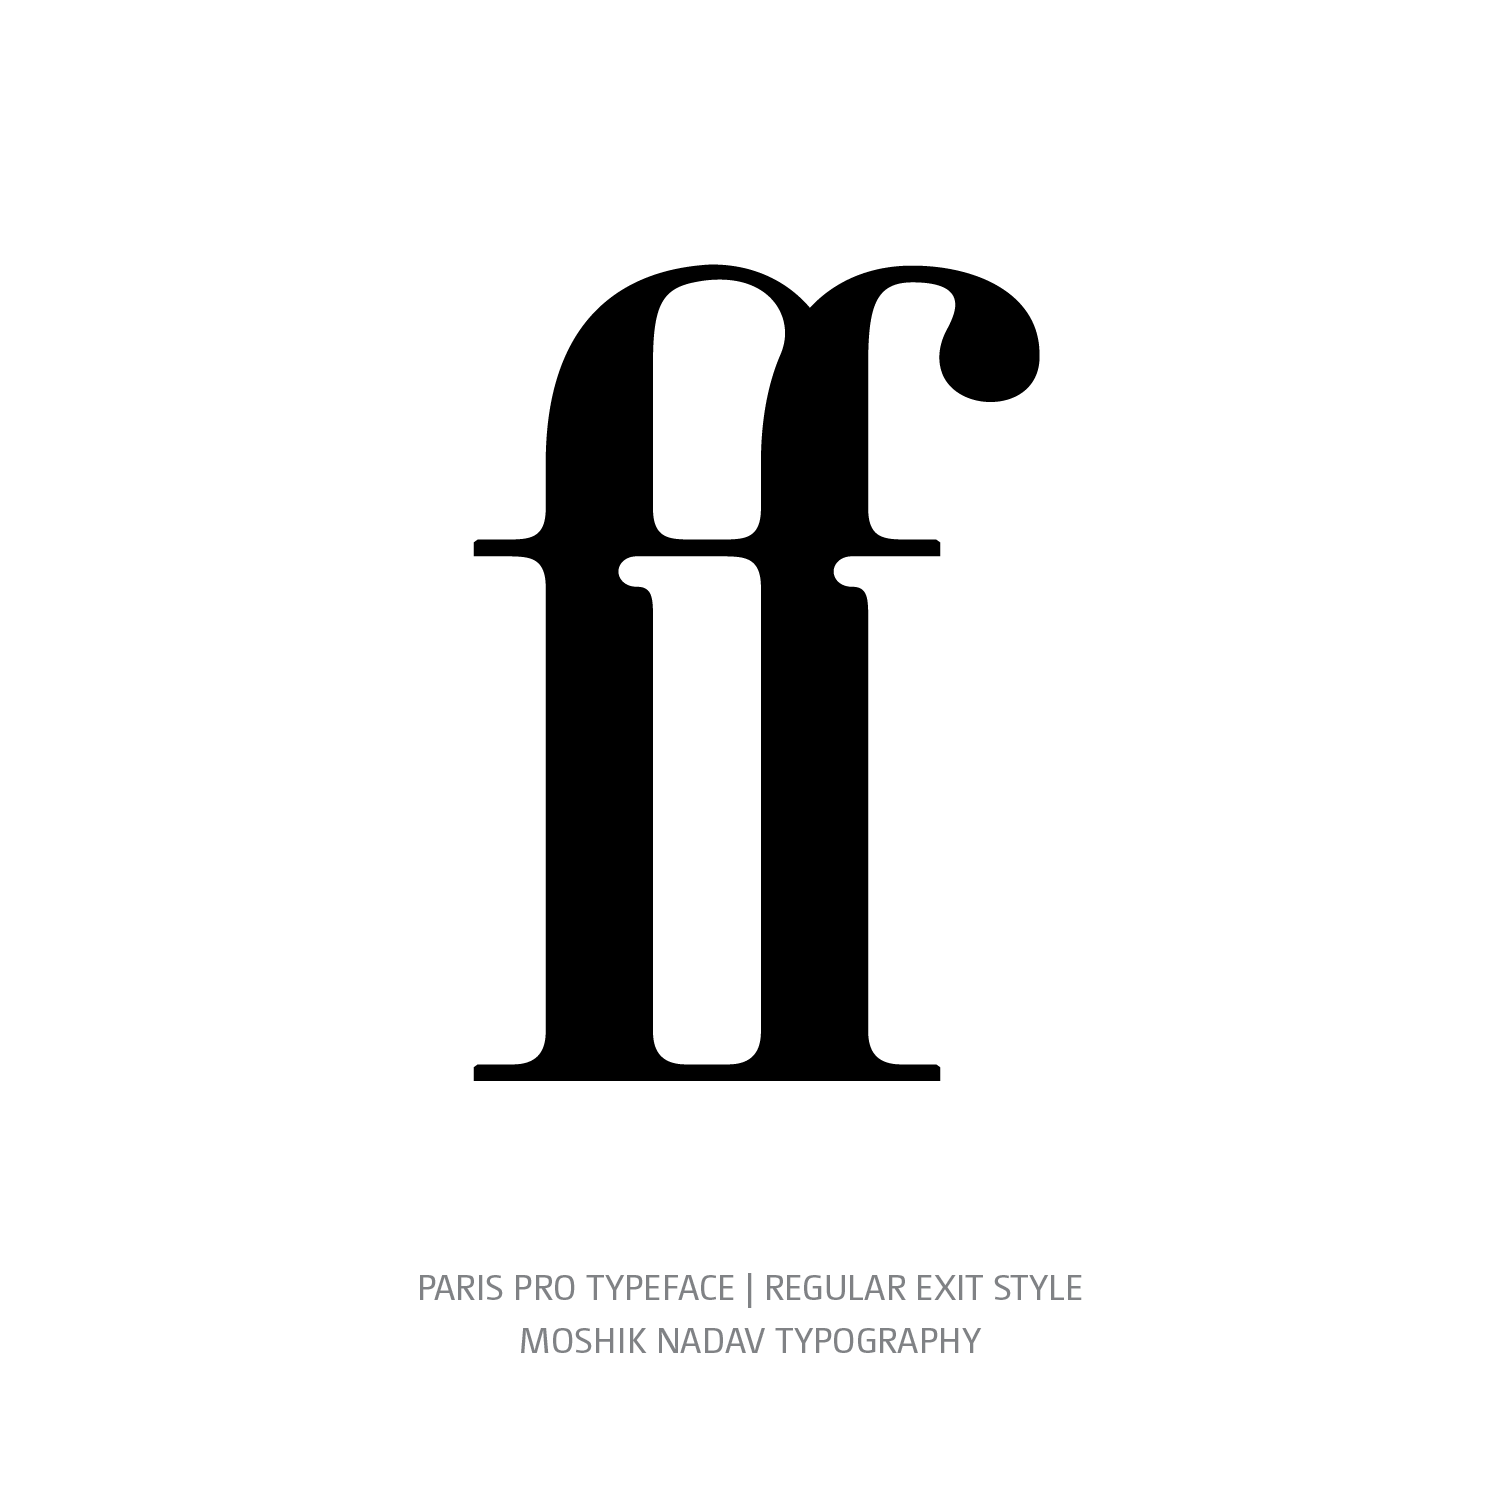 Paris Pro Typeface Regular Exit ff ligature